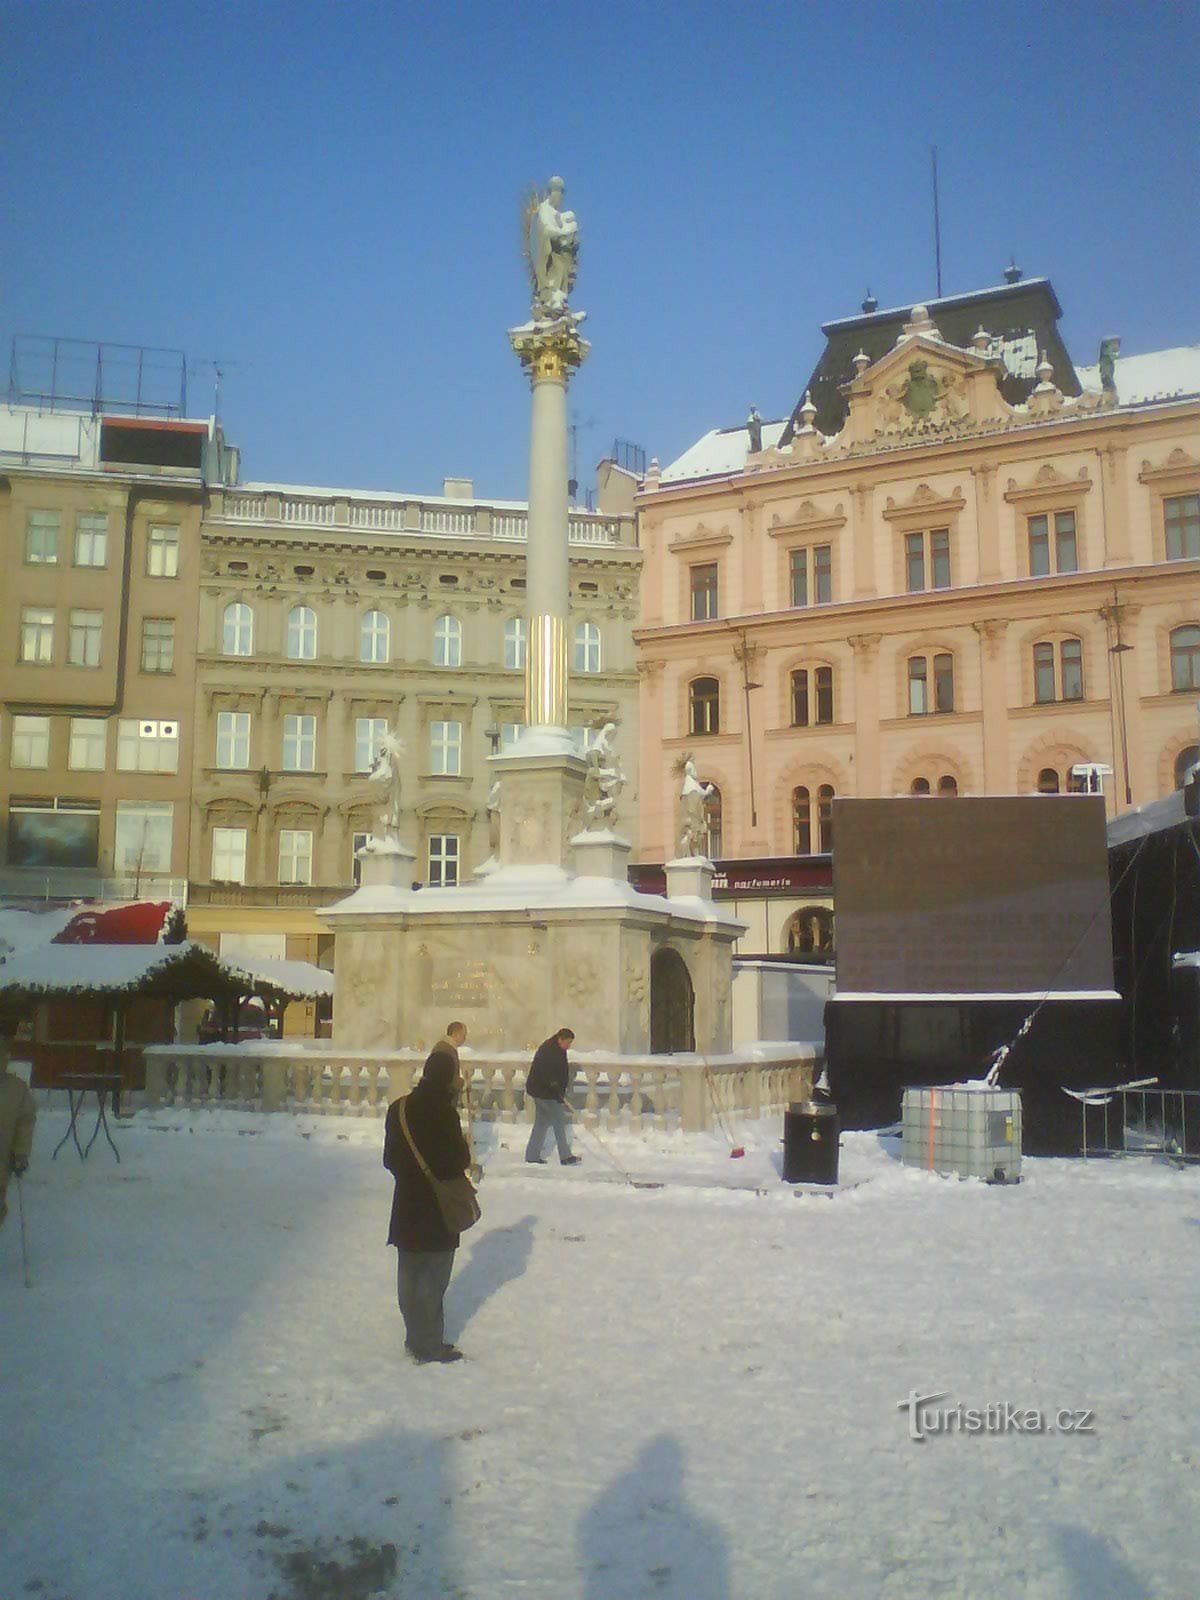 Plague column on Slobody Square in Brno